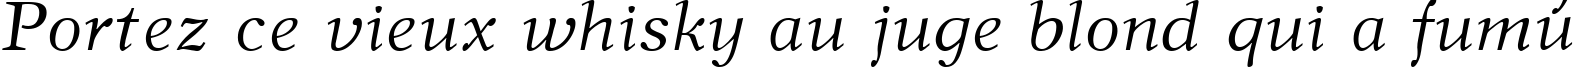 Пример написания шрифтом New Journal Italic:001.001 текста на французском